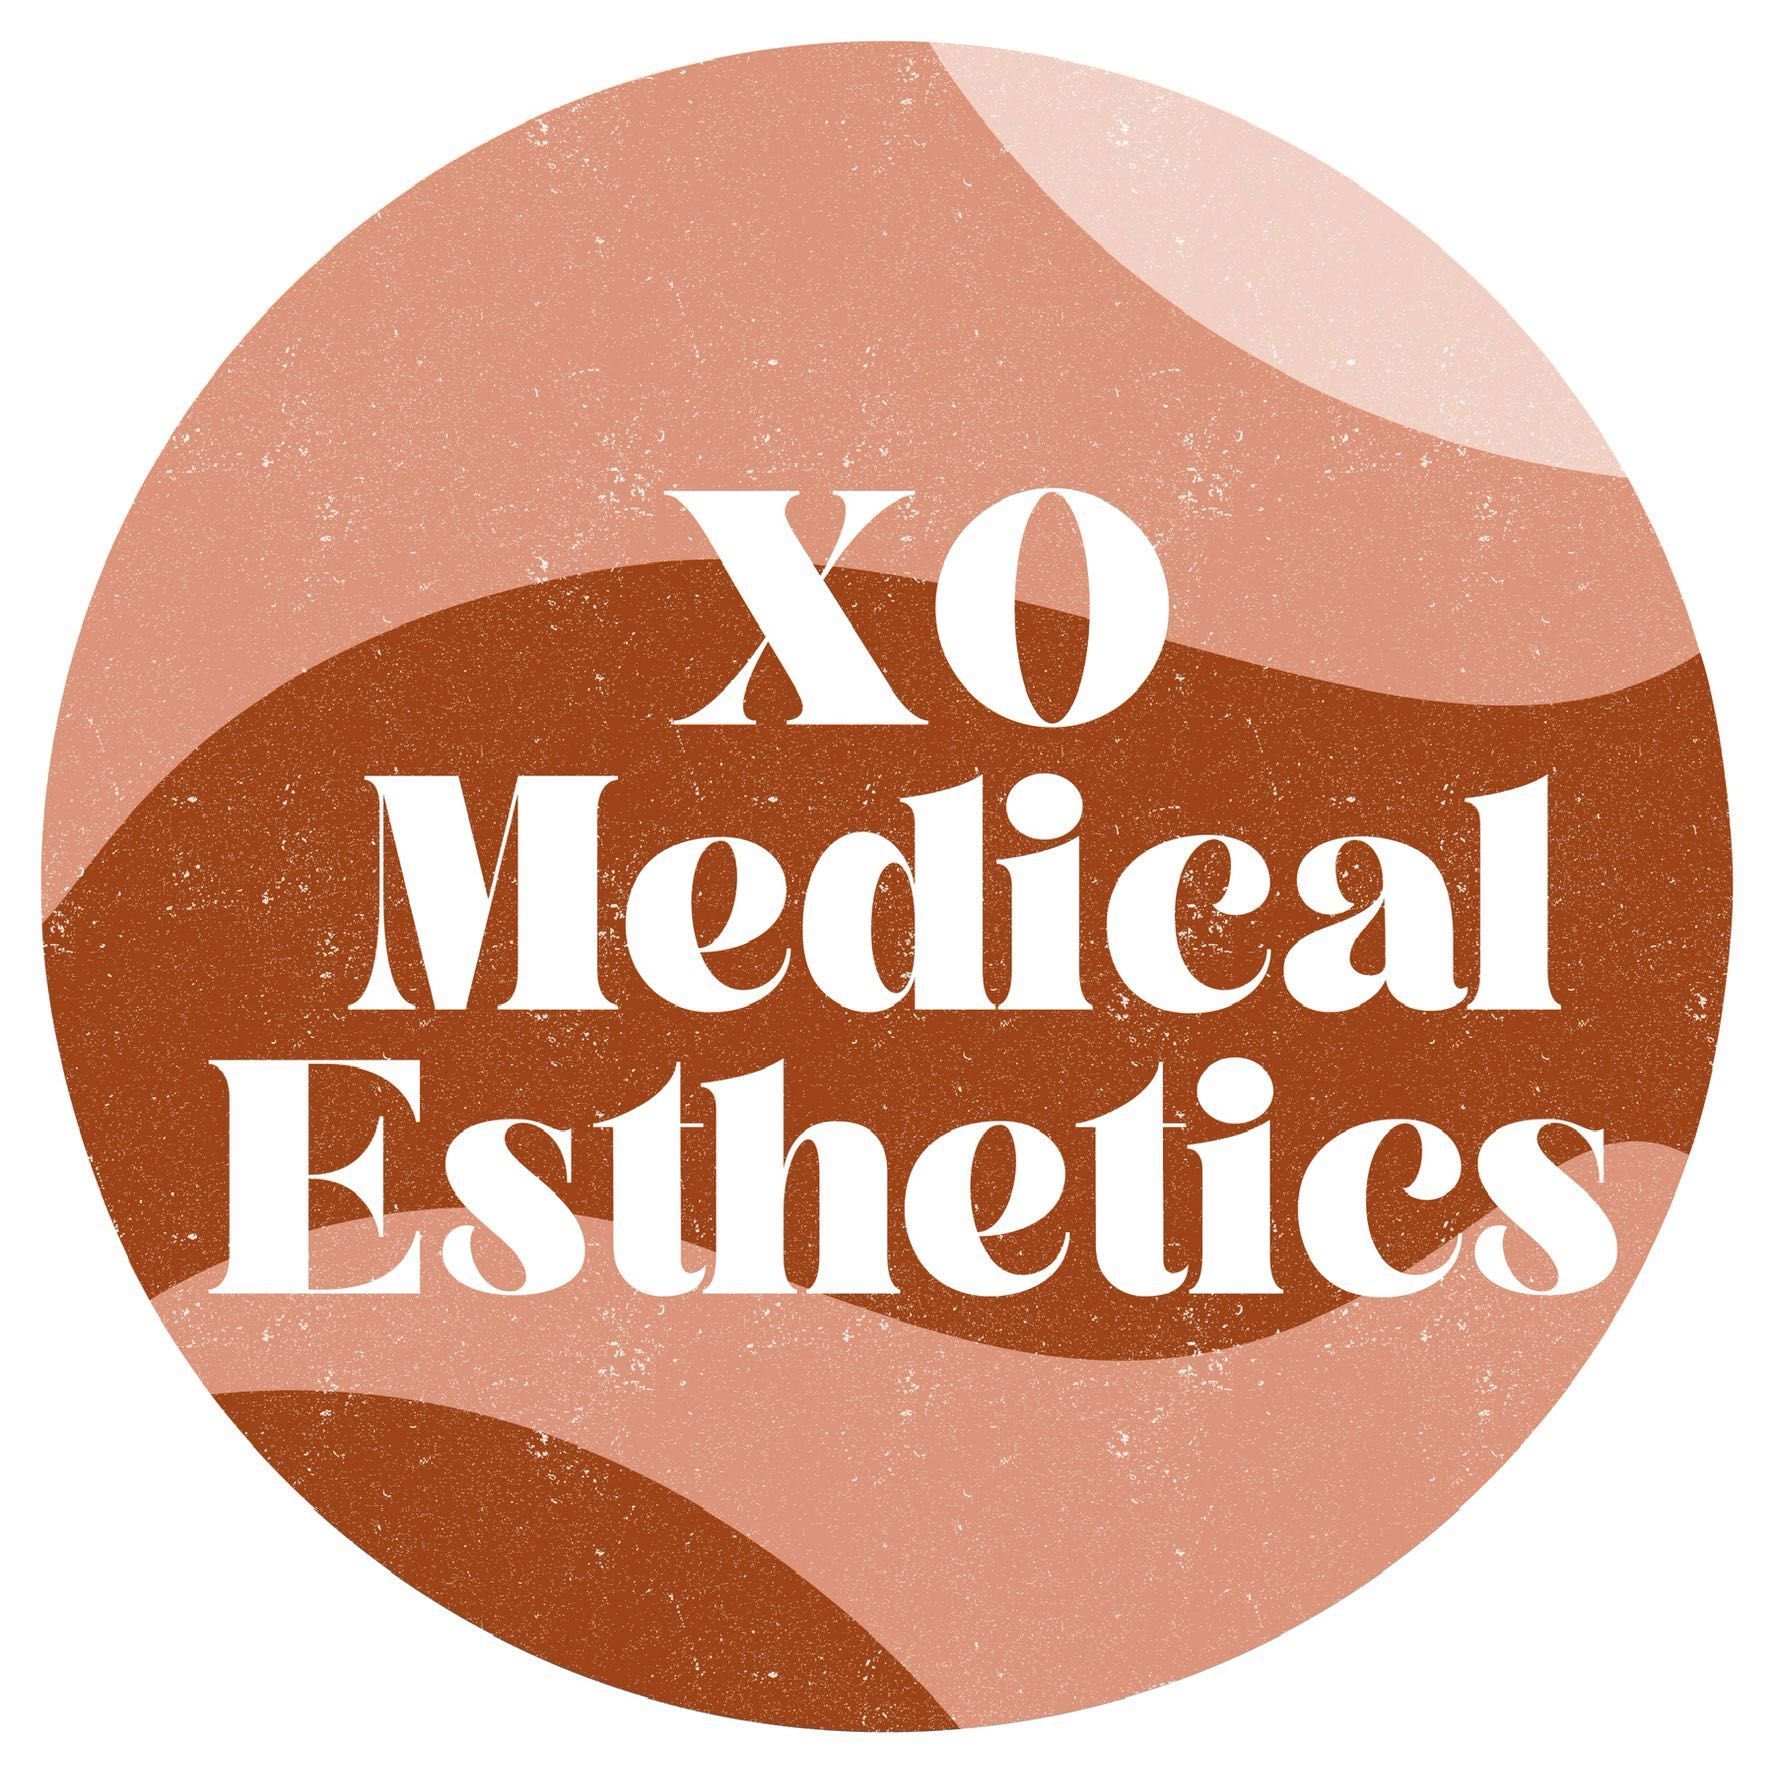 XO Medical Esthetics, Ave. Luis Muñoz Marin Urb Mariolga S1, S1, Caguas, 00725